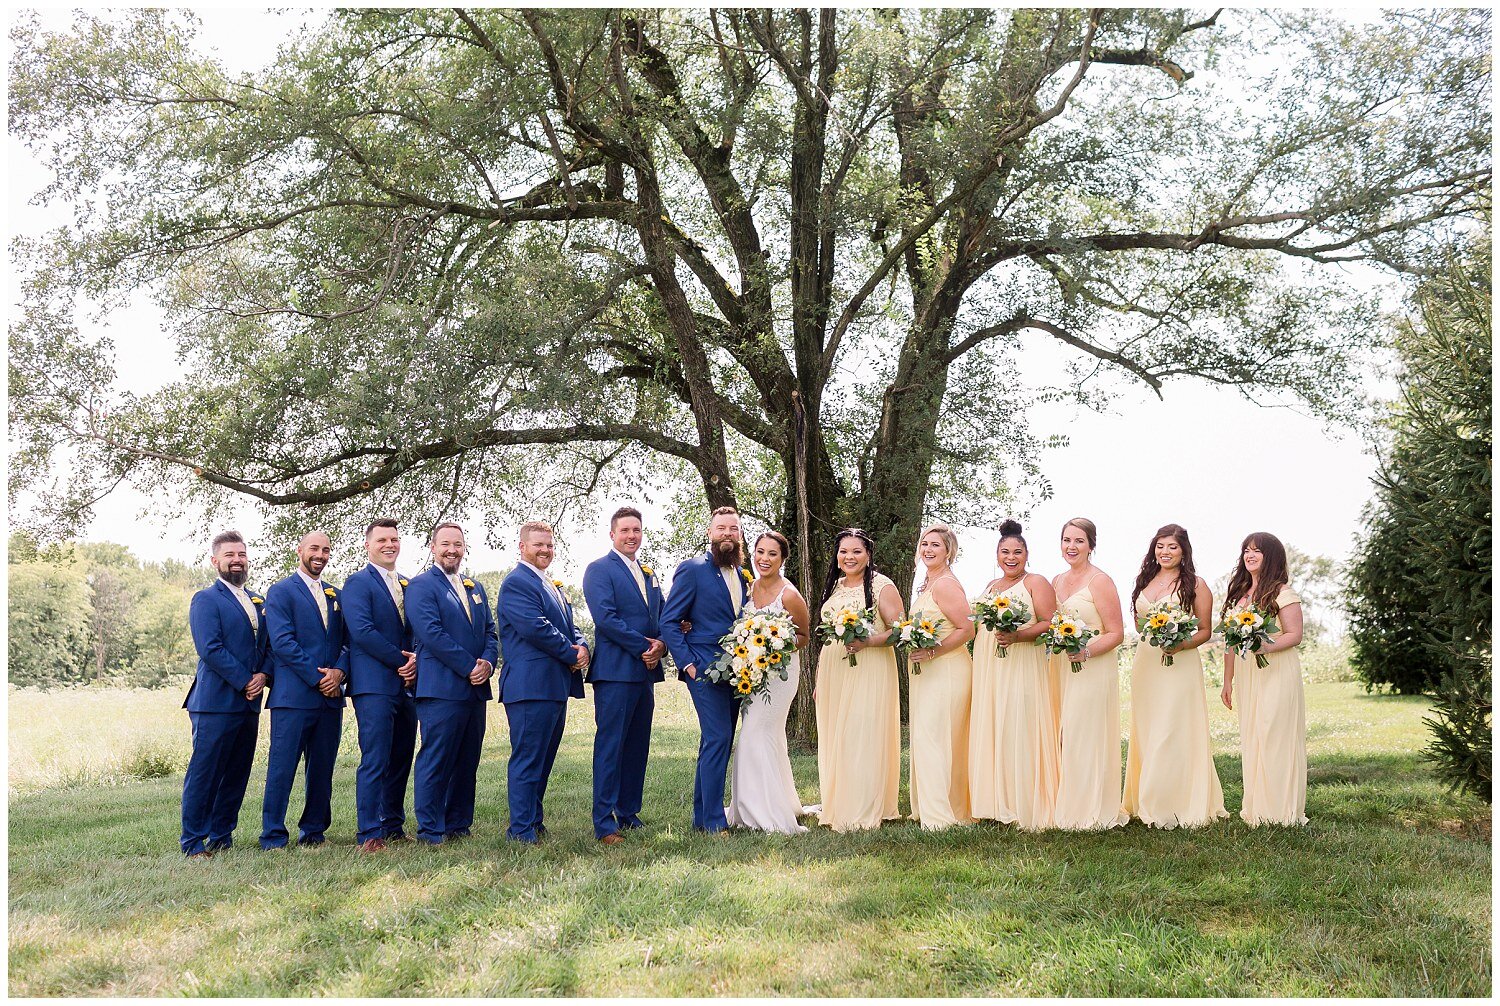 Yellow-and-Navy-Summer-Outdoor-Wedding-The-Legacy-Kansas-City-B+C-08-2020-Elizabeth-Ladean-Photography-photo-_5471.jpg